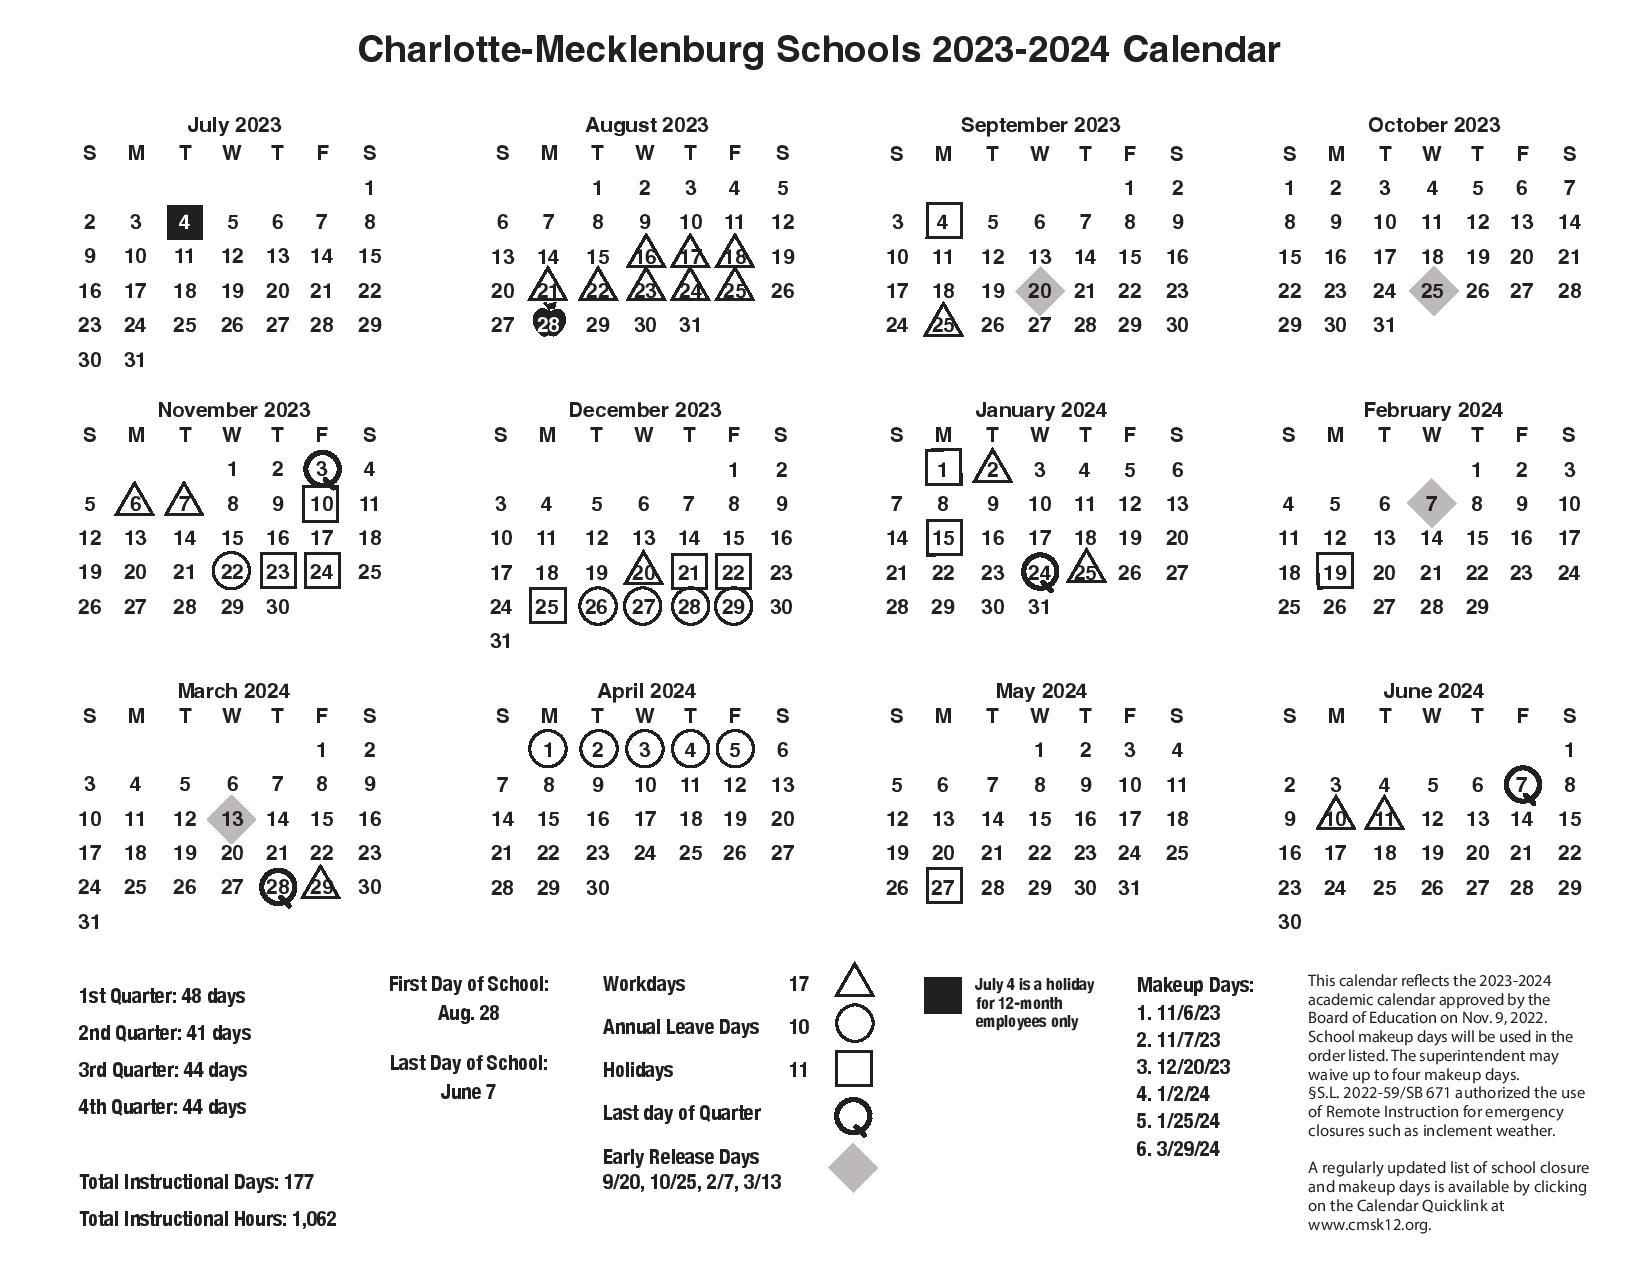 cms-schools-calendar-2023-2024-charlotte-mecklenburg